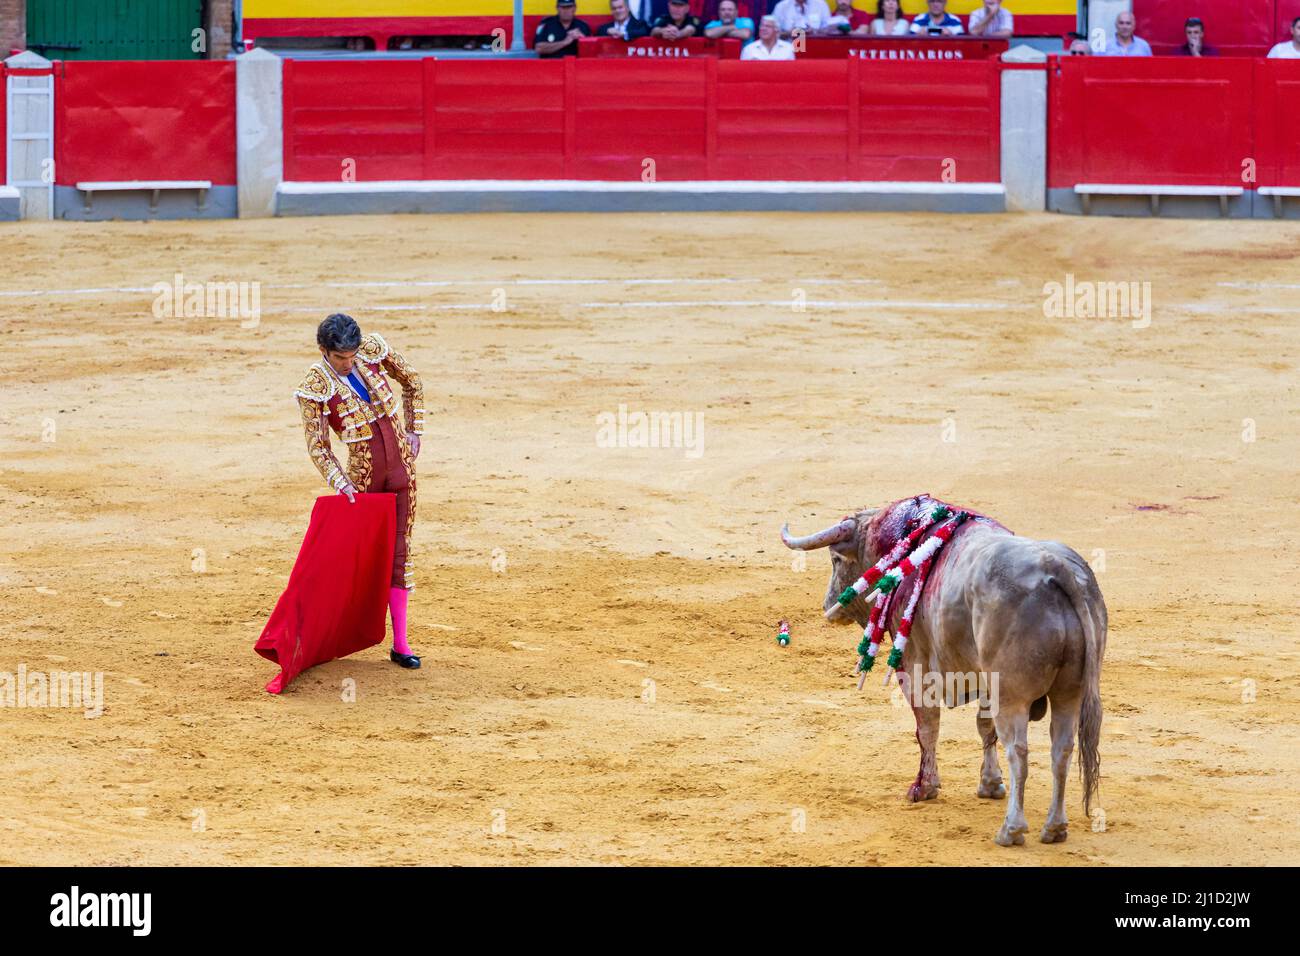 Granada, Spain. June 19, 2014. Bullfighter Jose Tomas in a bullfight at the corpus fair in granada.  Stock Photo